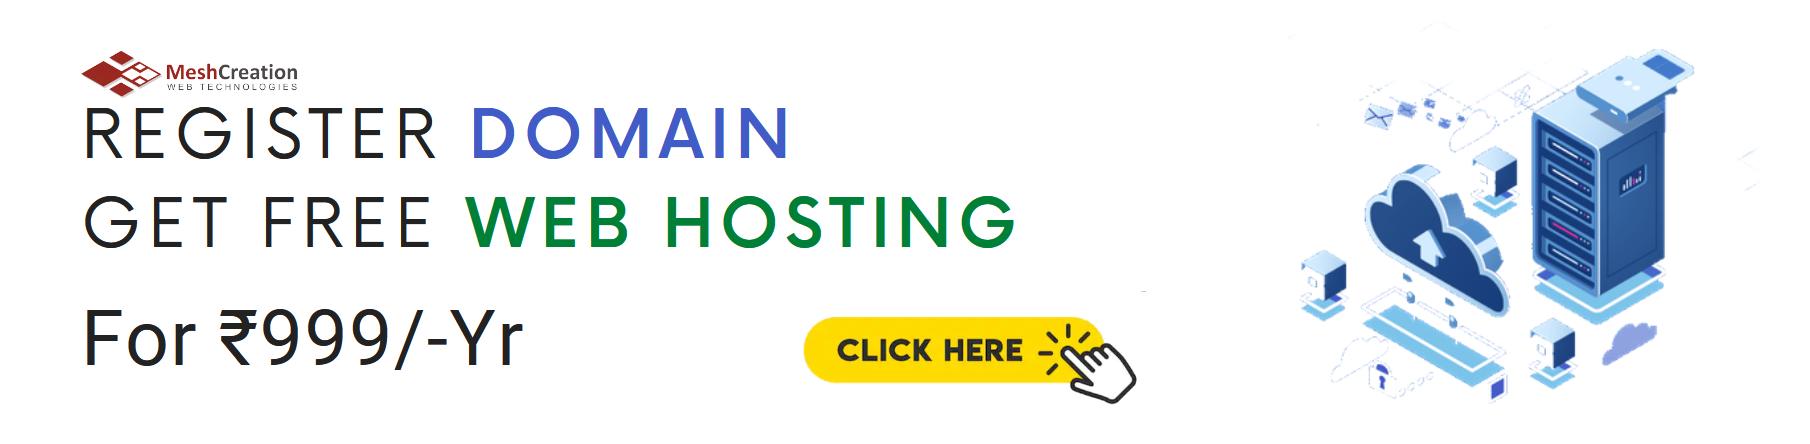 Cheap web hosting mesh creation